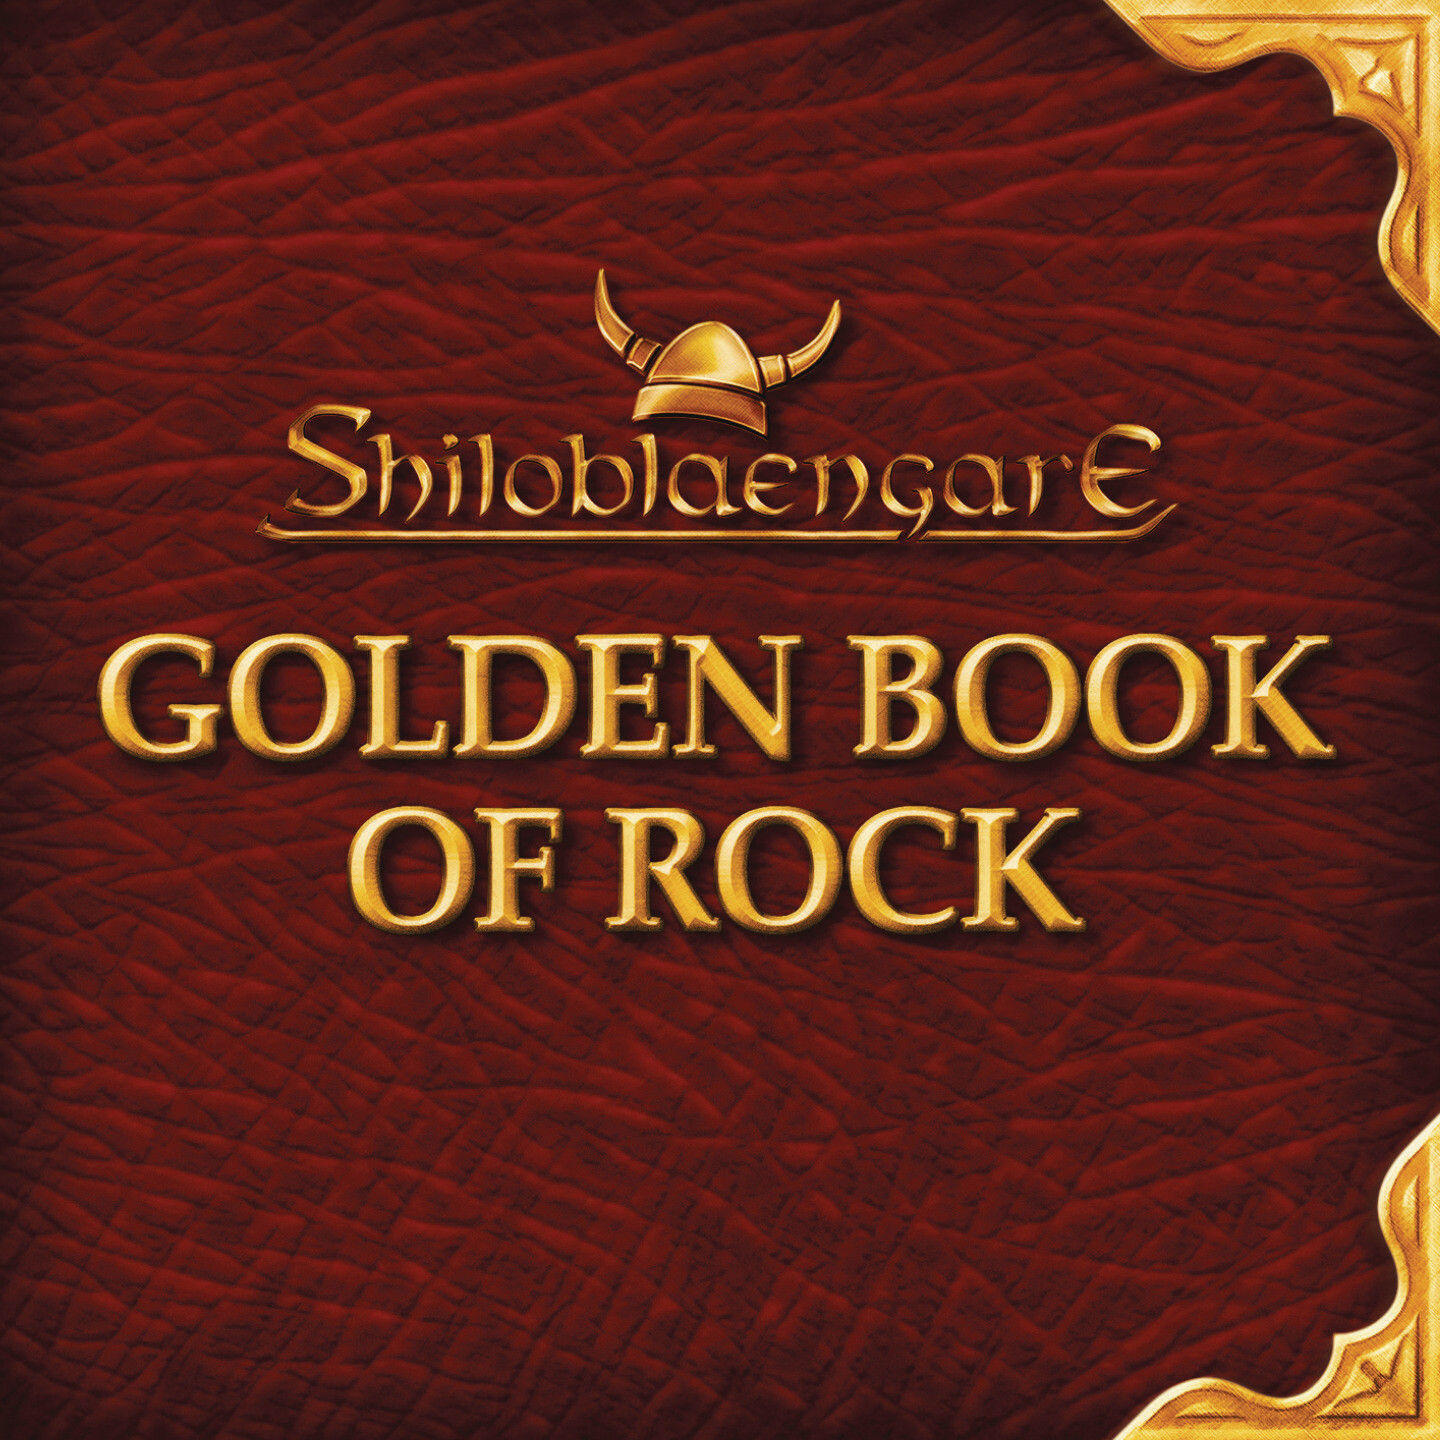 SHILOBLAENGARE / CD-Album "Golden Book of Rock"